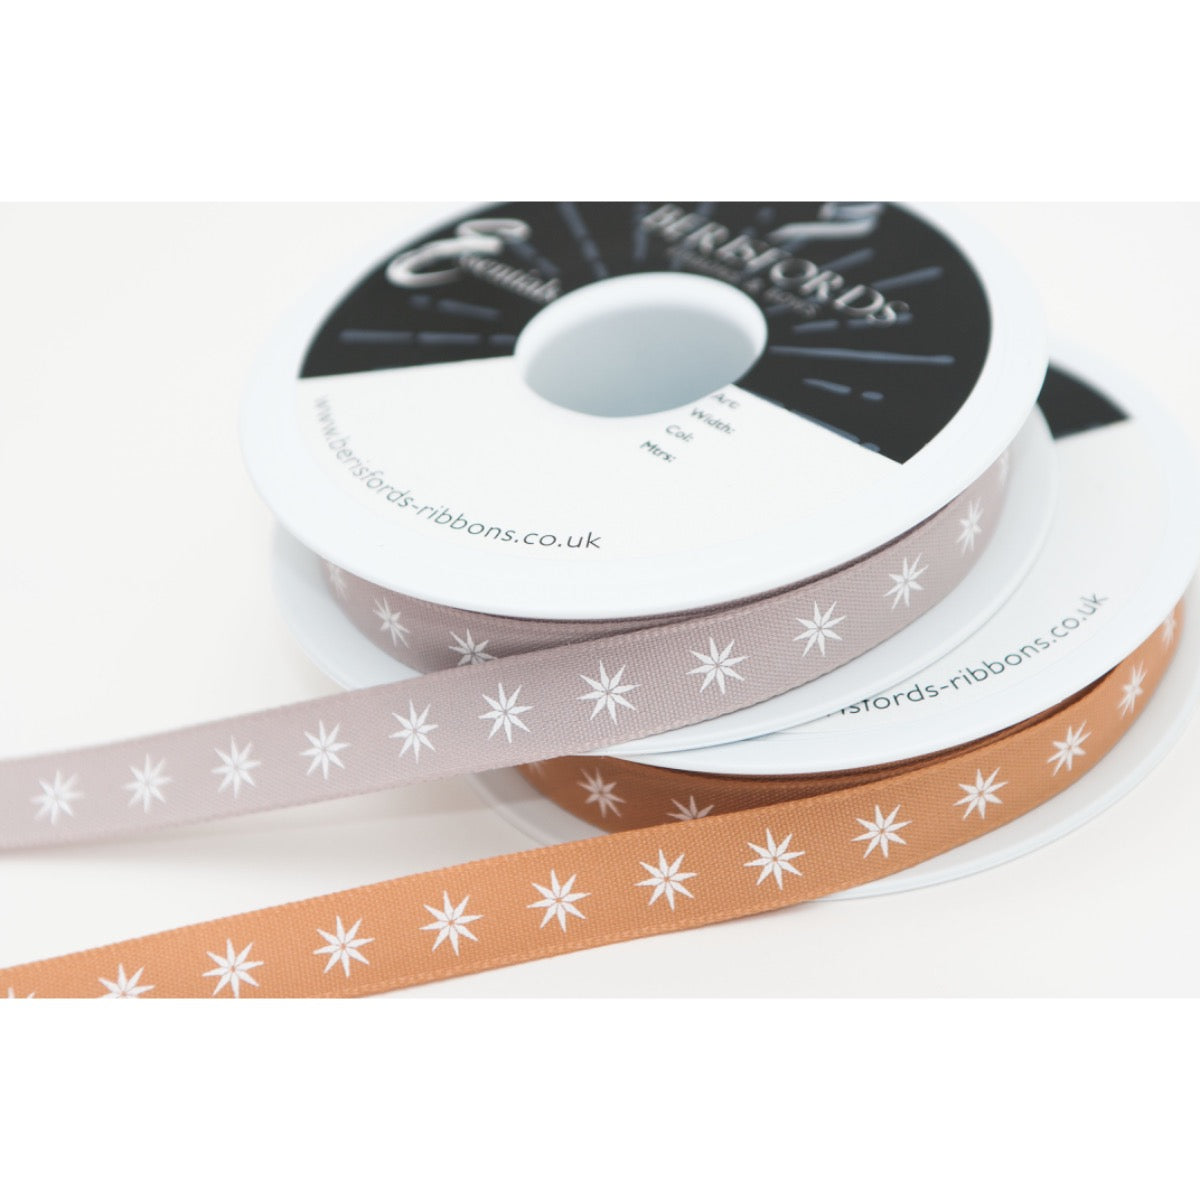 Scandi Star Ribbon: Grey: 12mm wide. Price per metre.